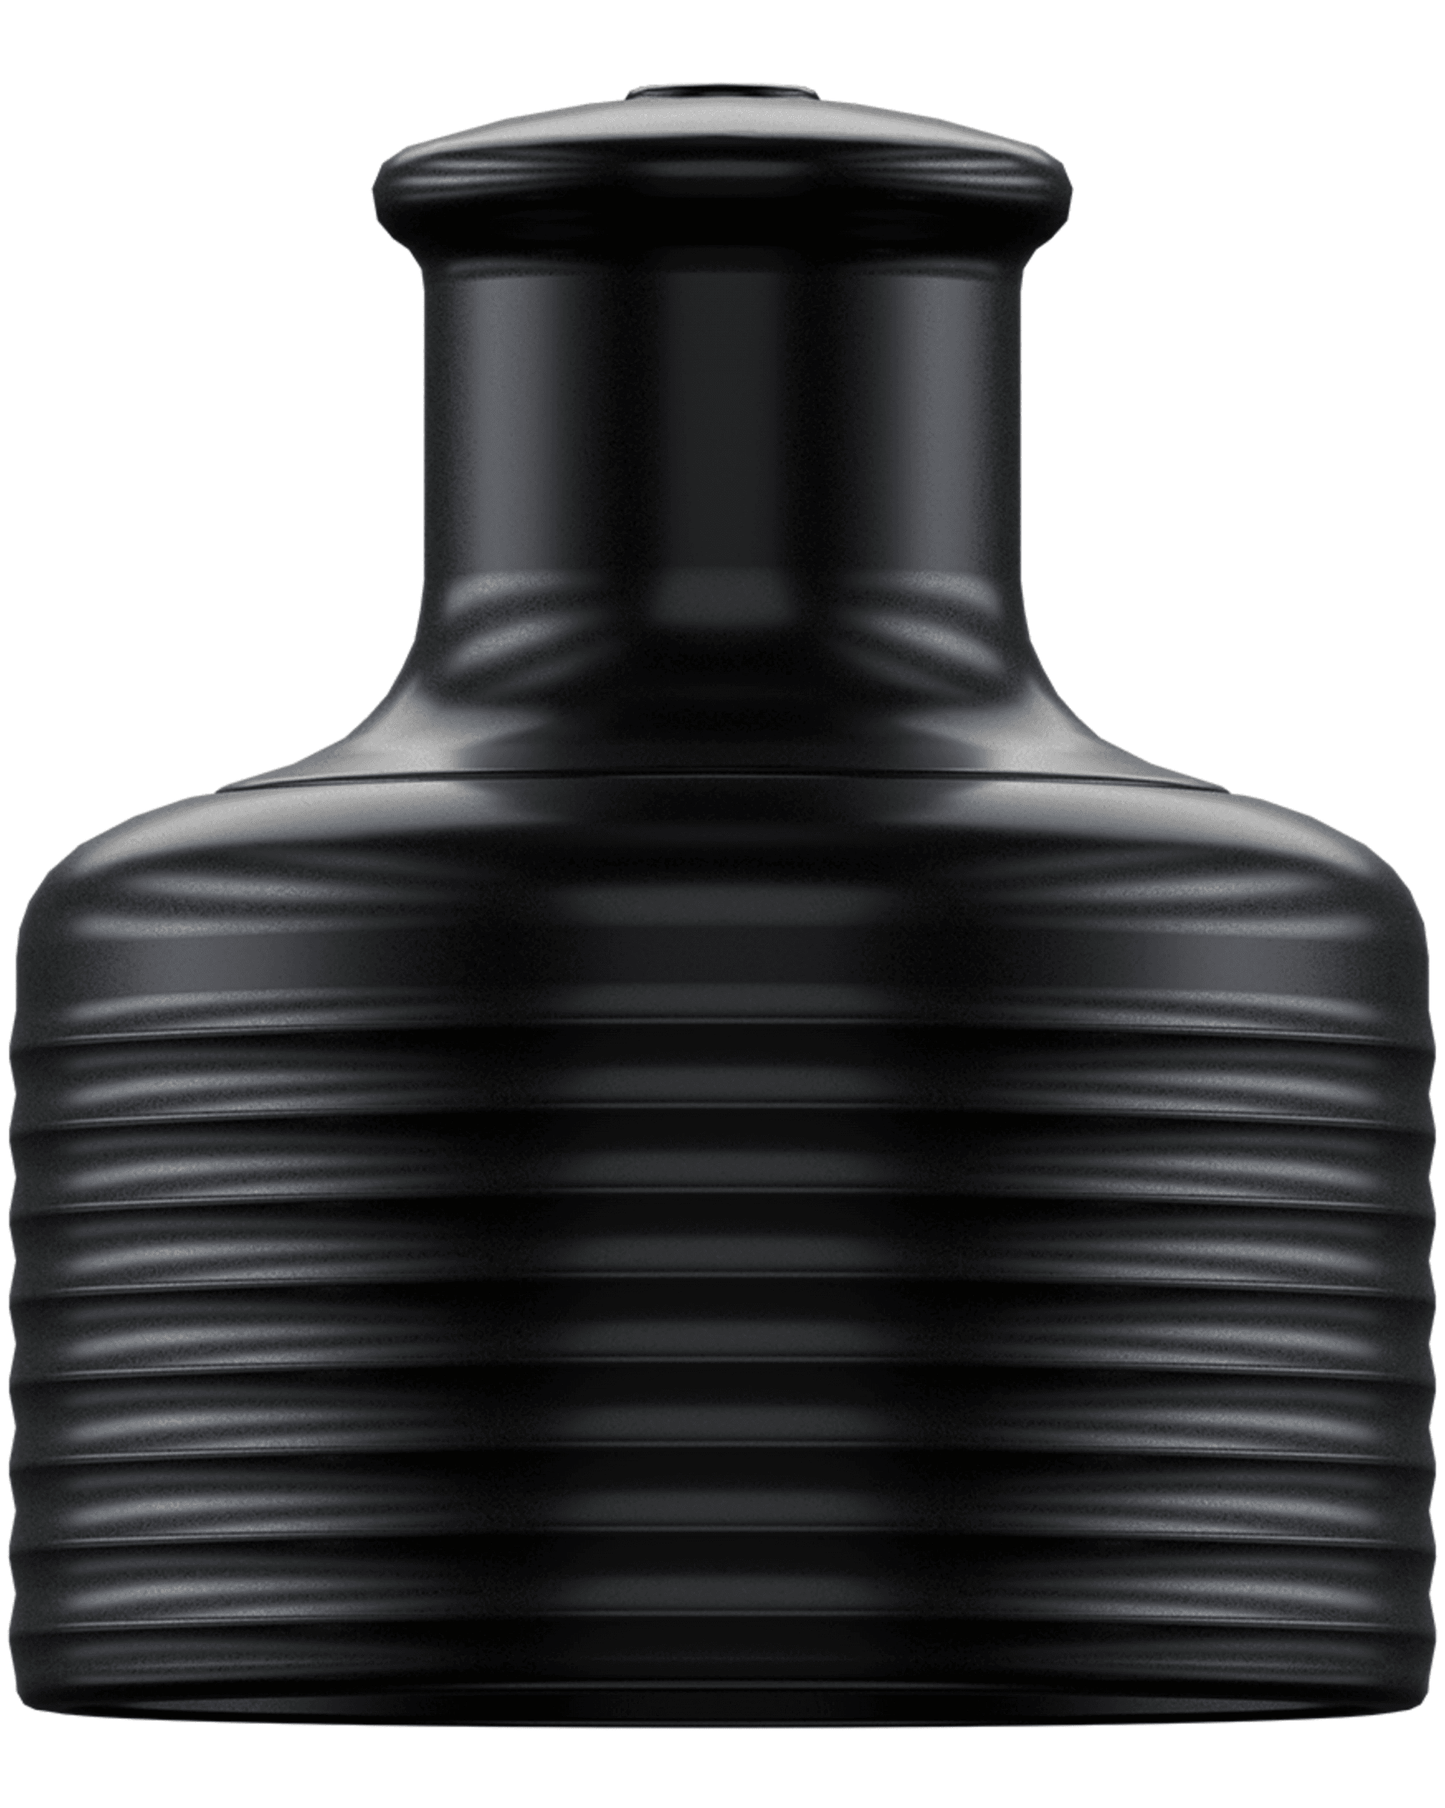 Monochrome Black Sports Lid for 260ml/500ml Bottle